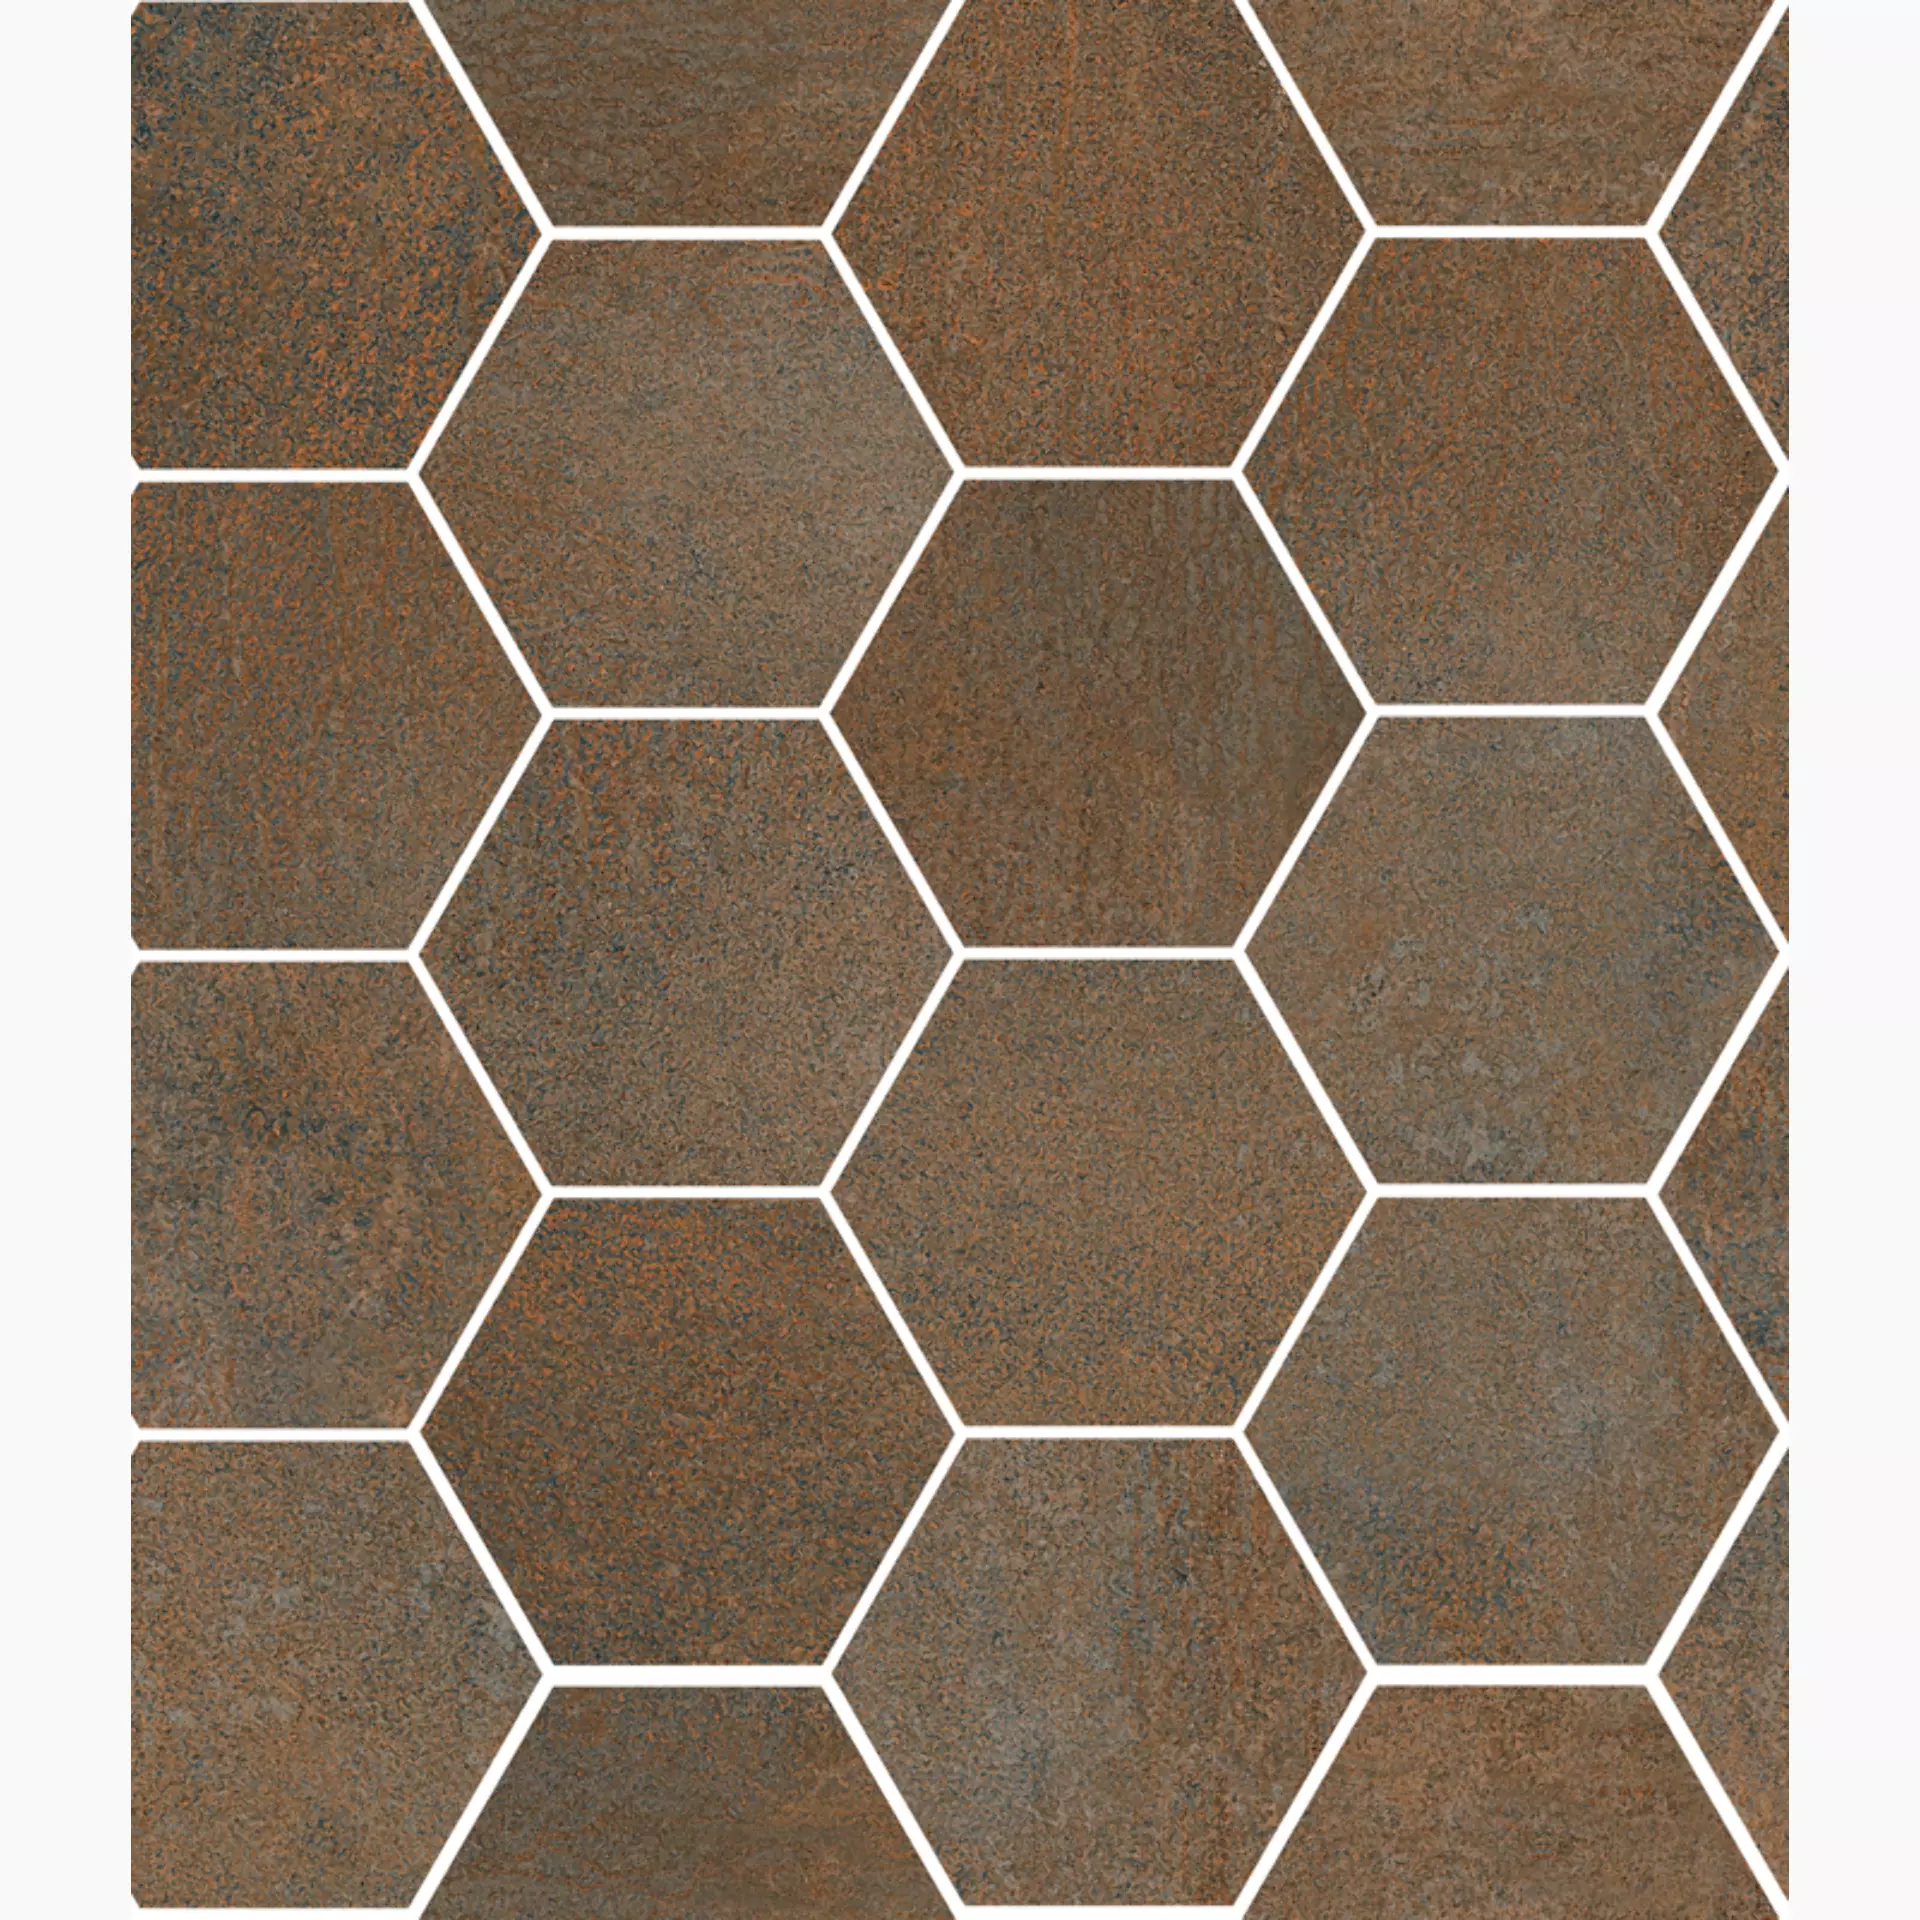 Sant Agostino Oxidart Copper Natural Hexagon CSAHOXCO26 26x30cm rectified 10mm